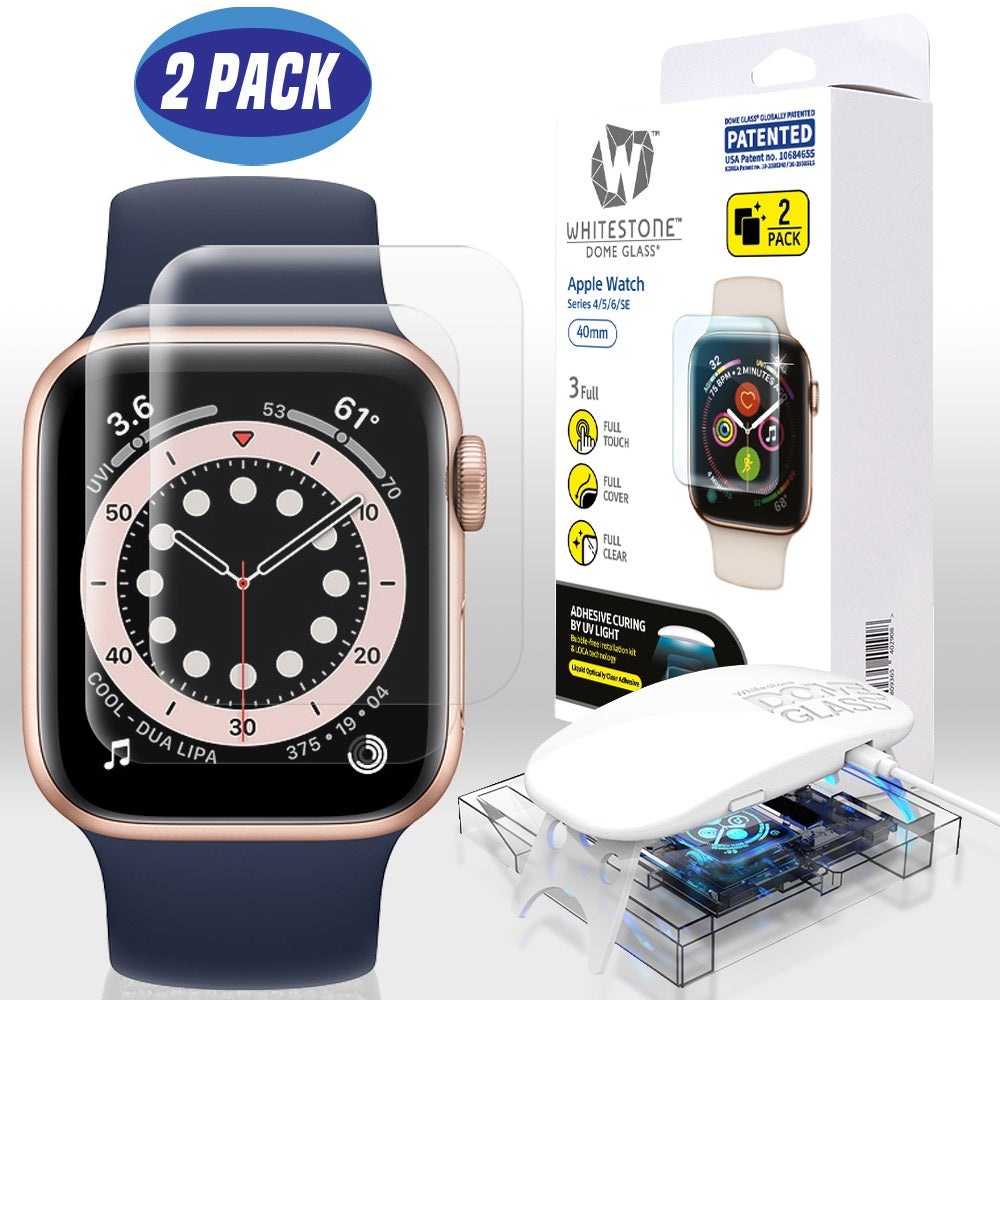 Whitestone Dome Glass (2packs) | Apple Watch Series 6/5/4 40MM